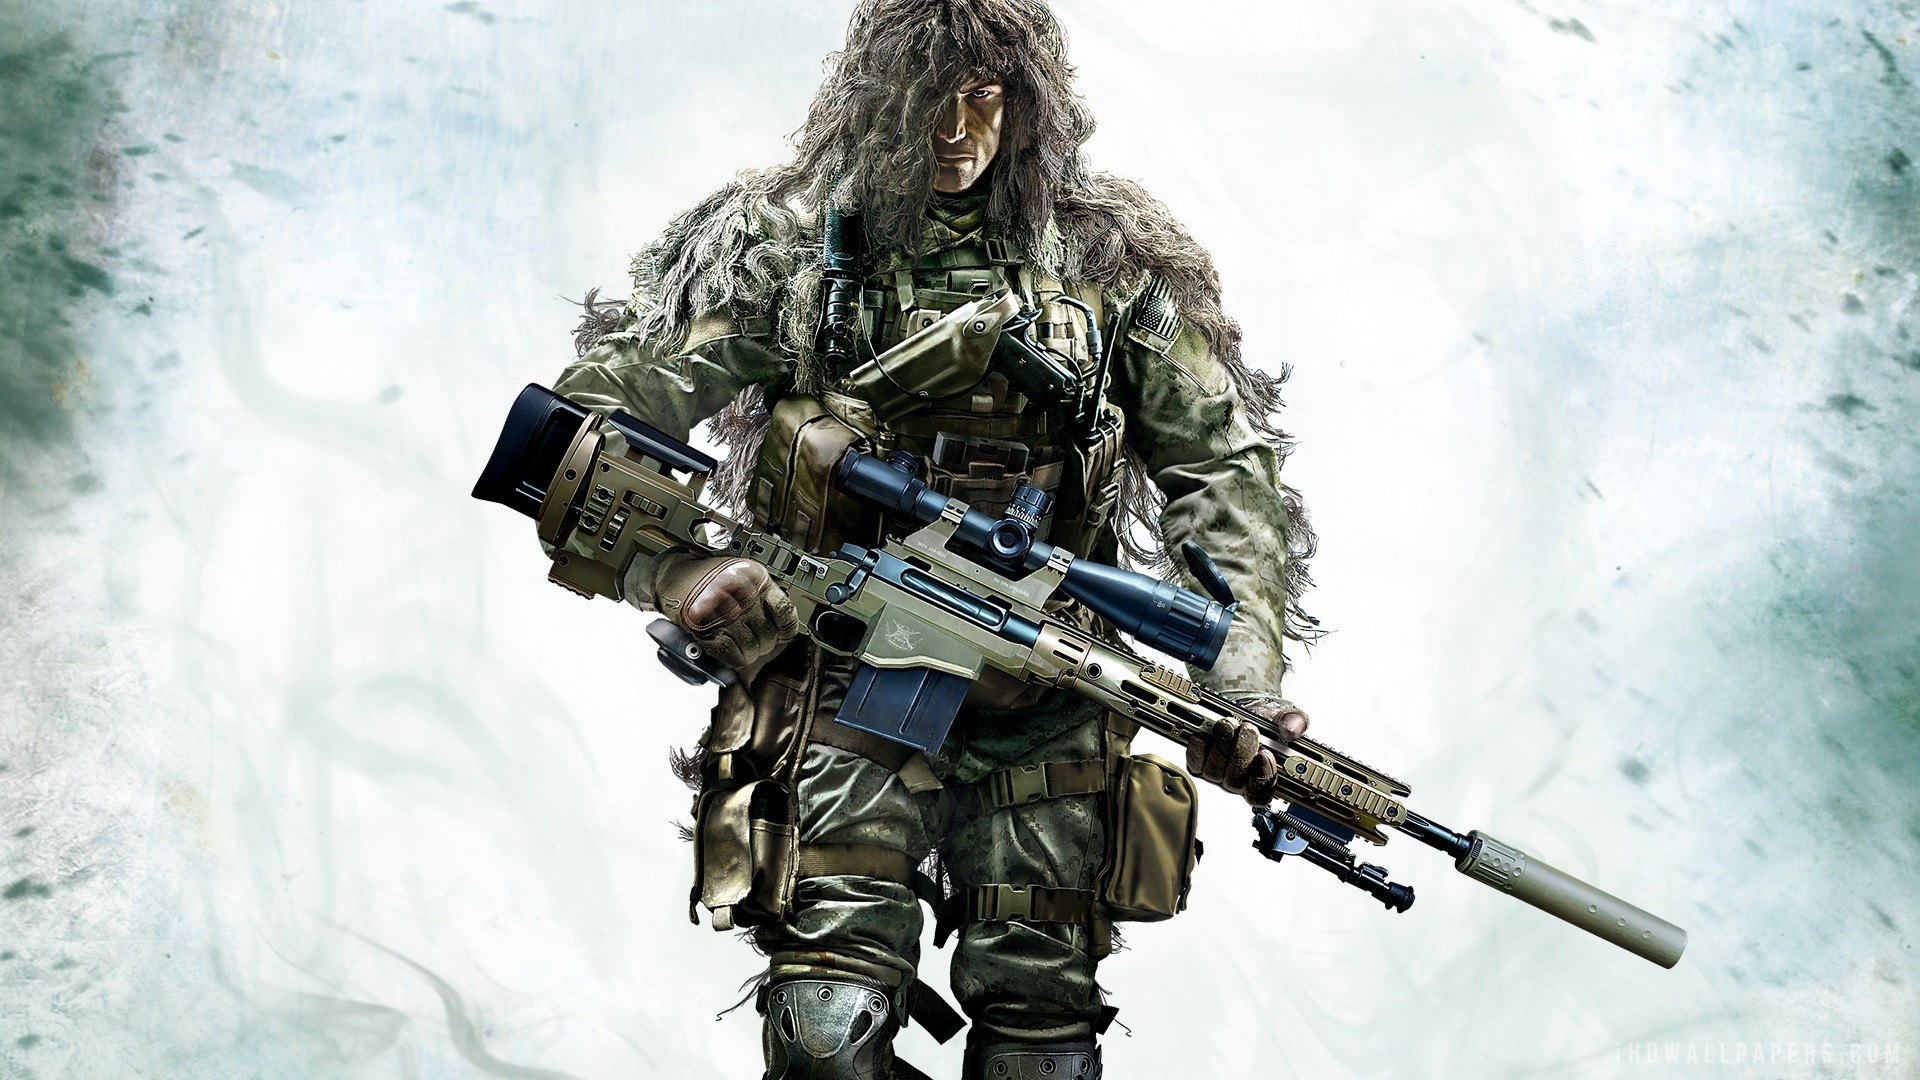 American Sniper Wallpaper HD